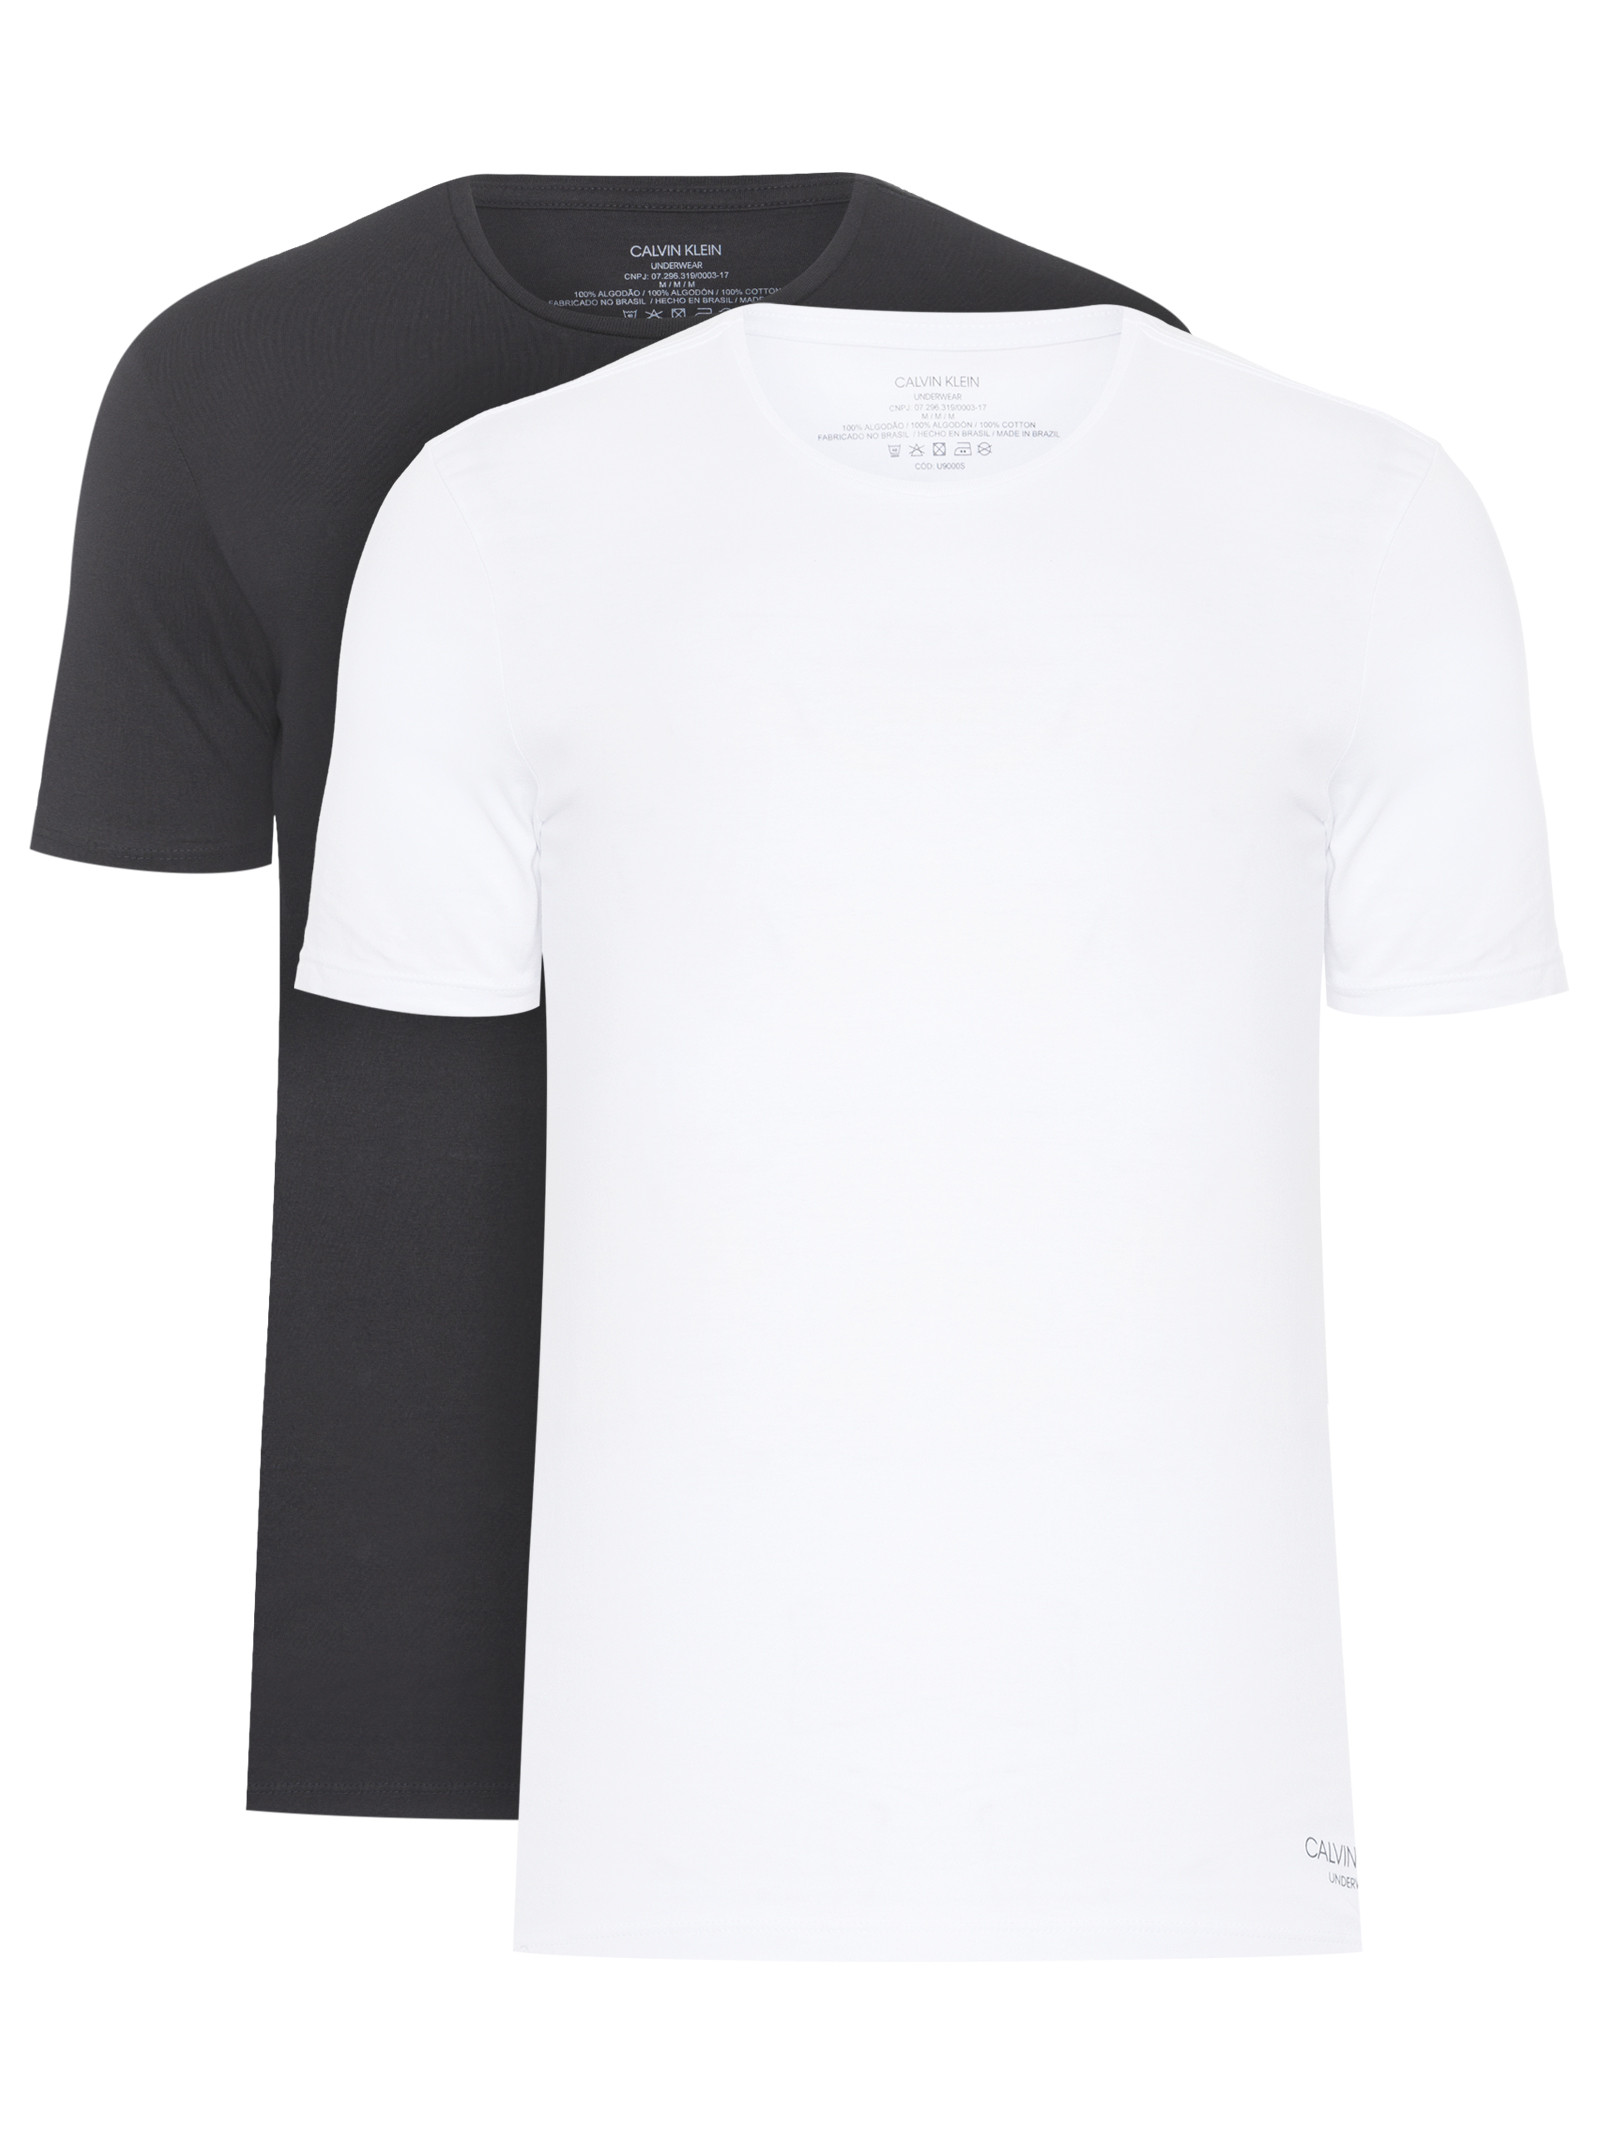 Camiseta Masculina Letter Tape Outline - Fila - Preto - Shop2gether